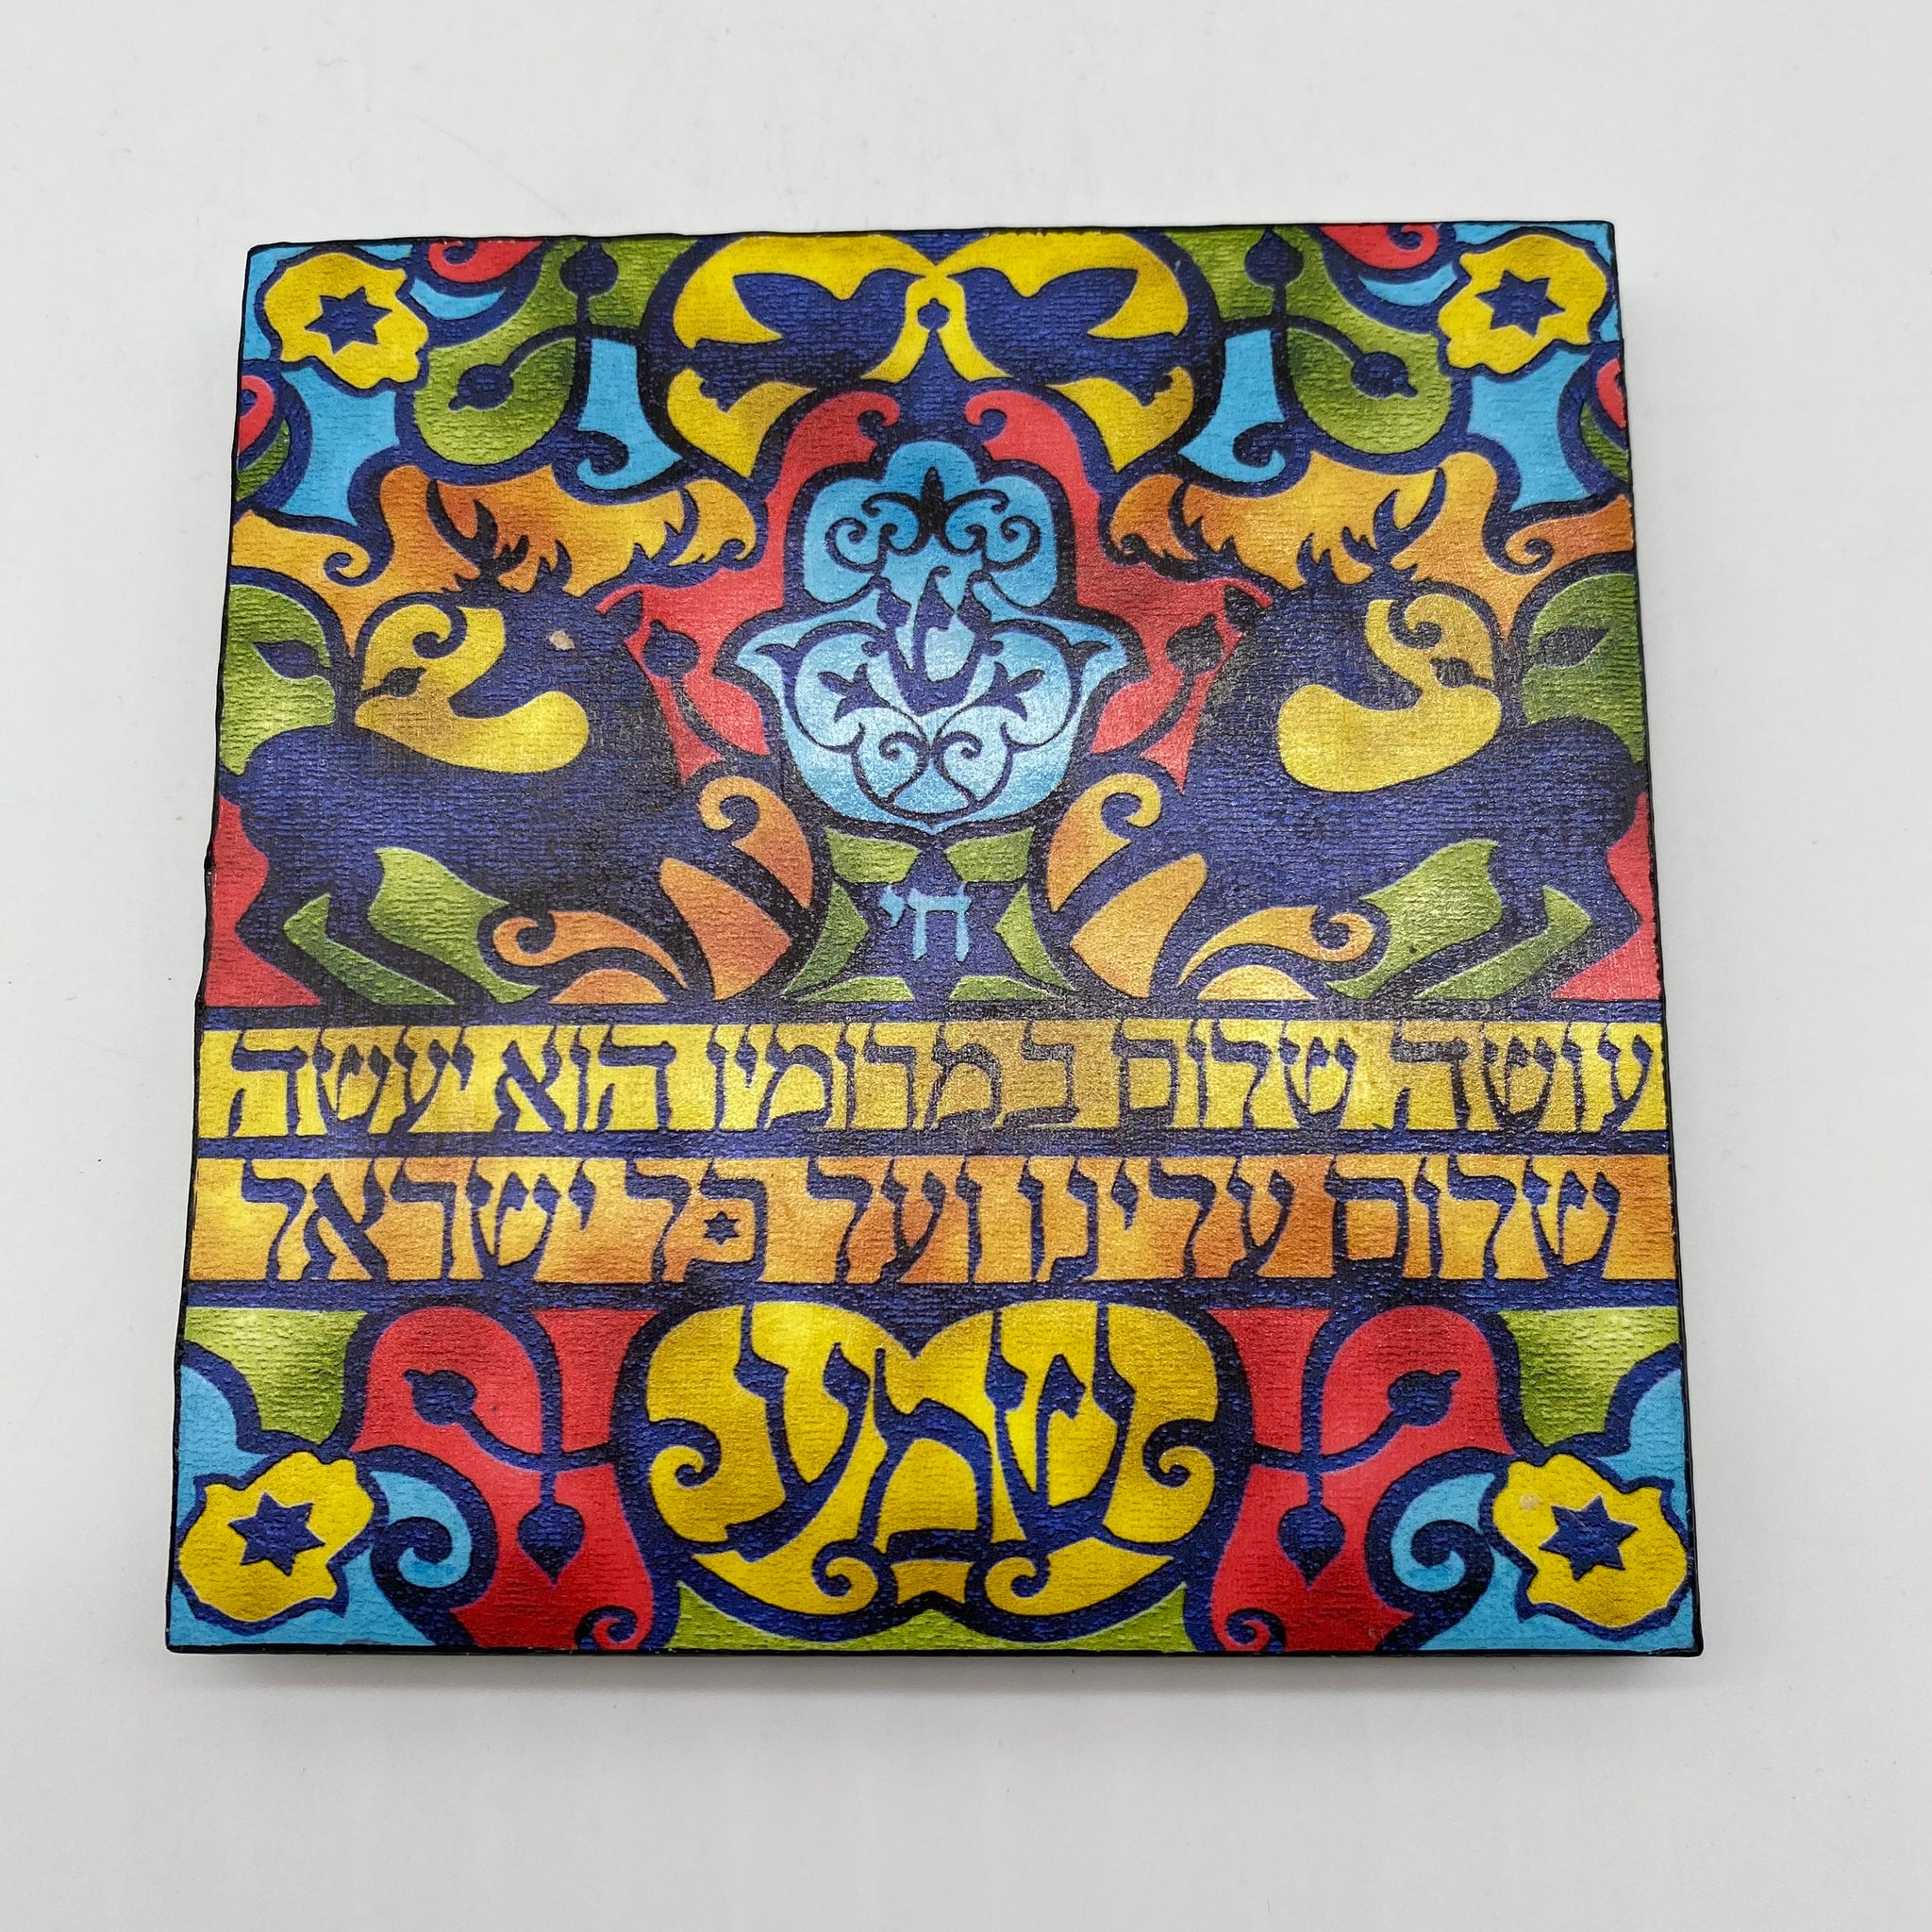 Shemah Menorah decorative tile by NJ artist 